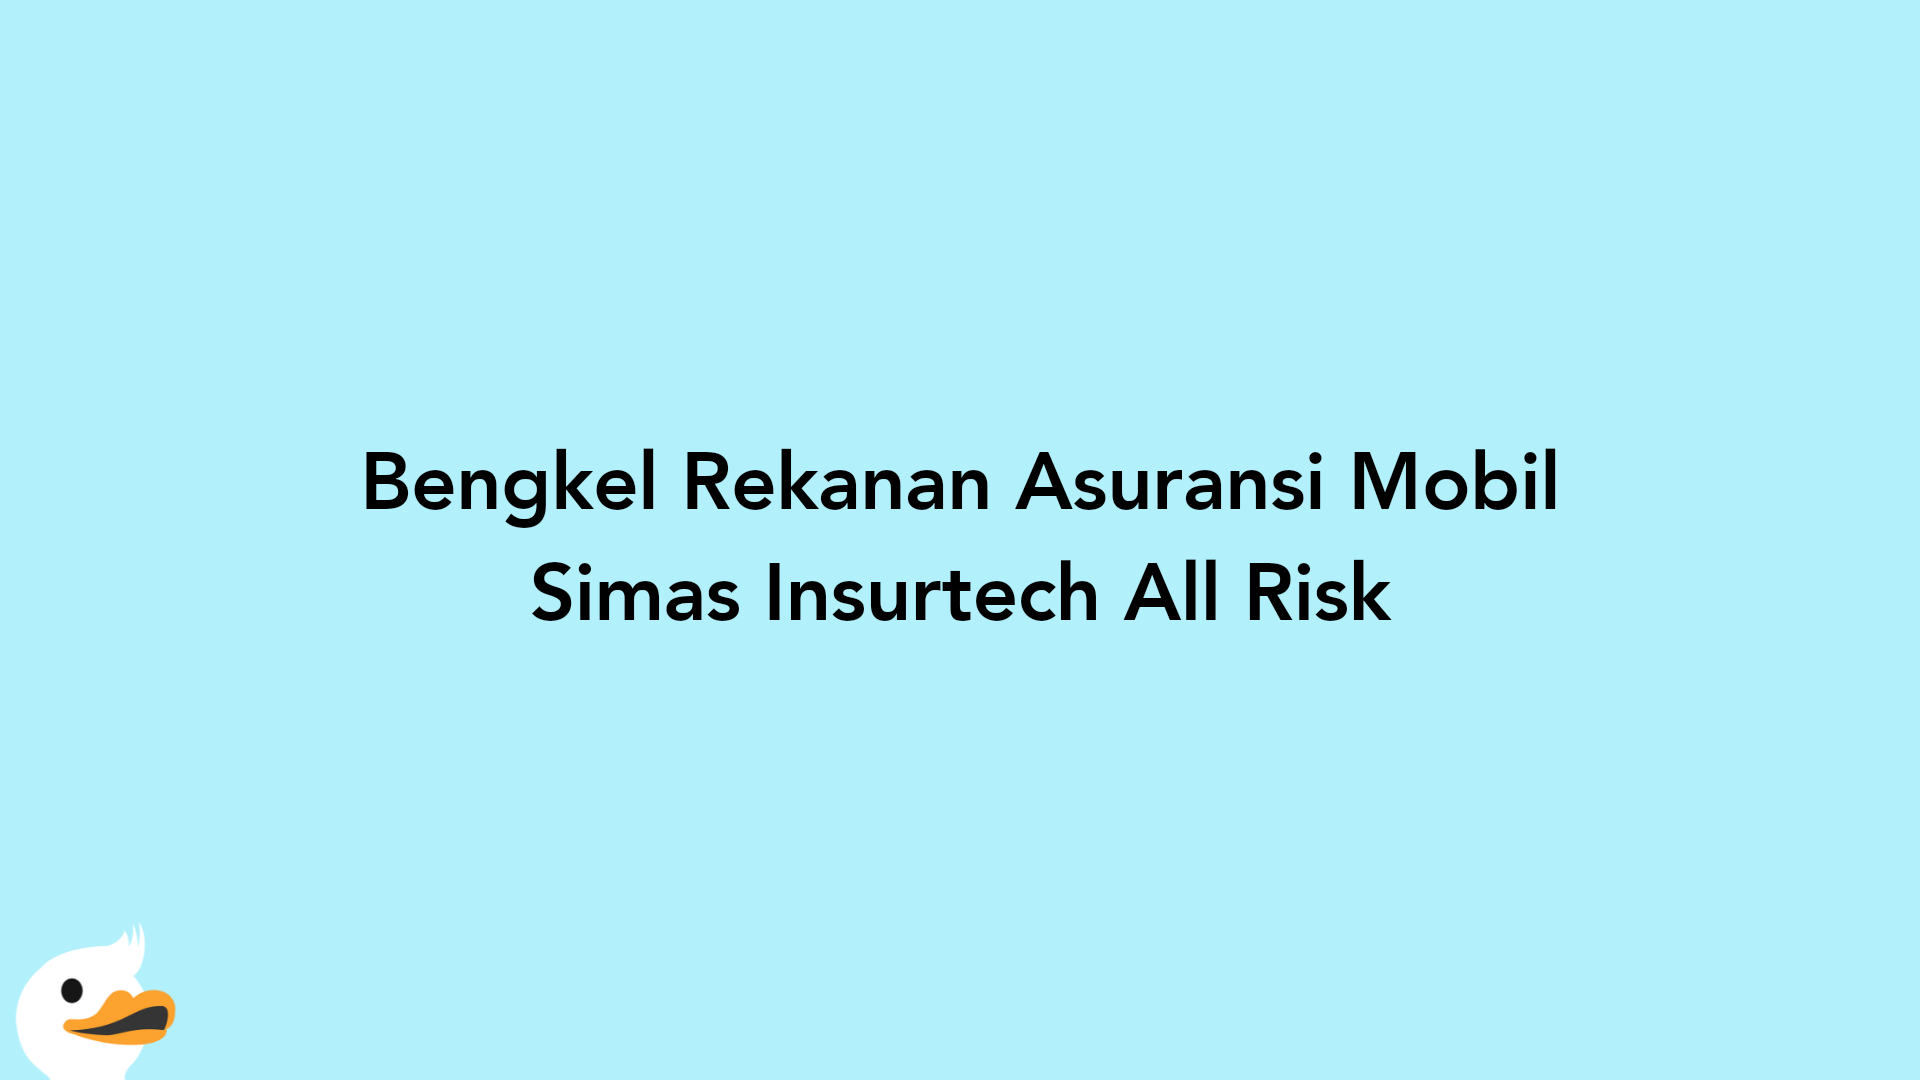 Bengkel Rekanan Asuransi Mobil Simas Insurtech All Risk